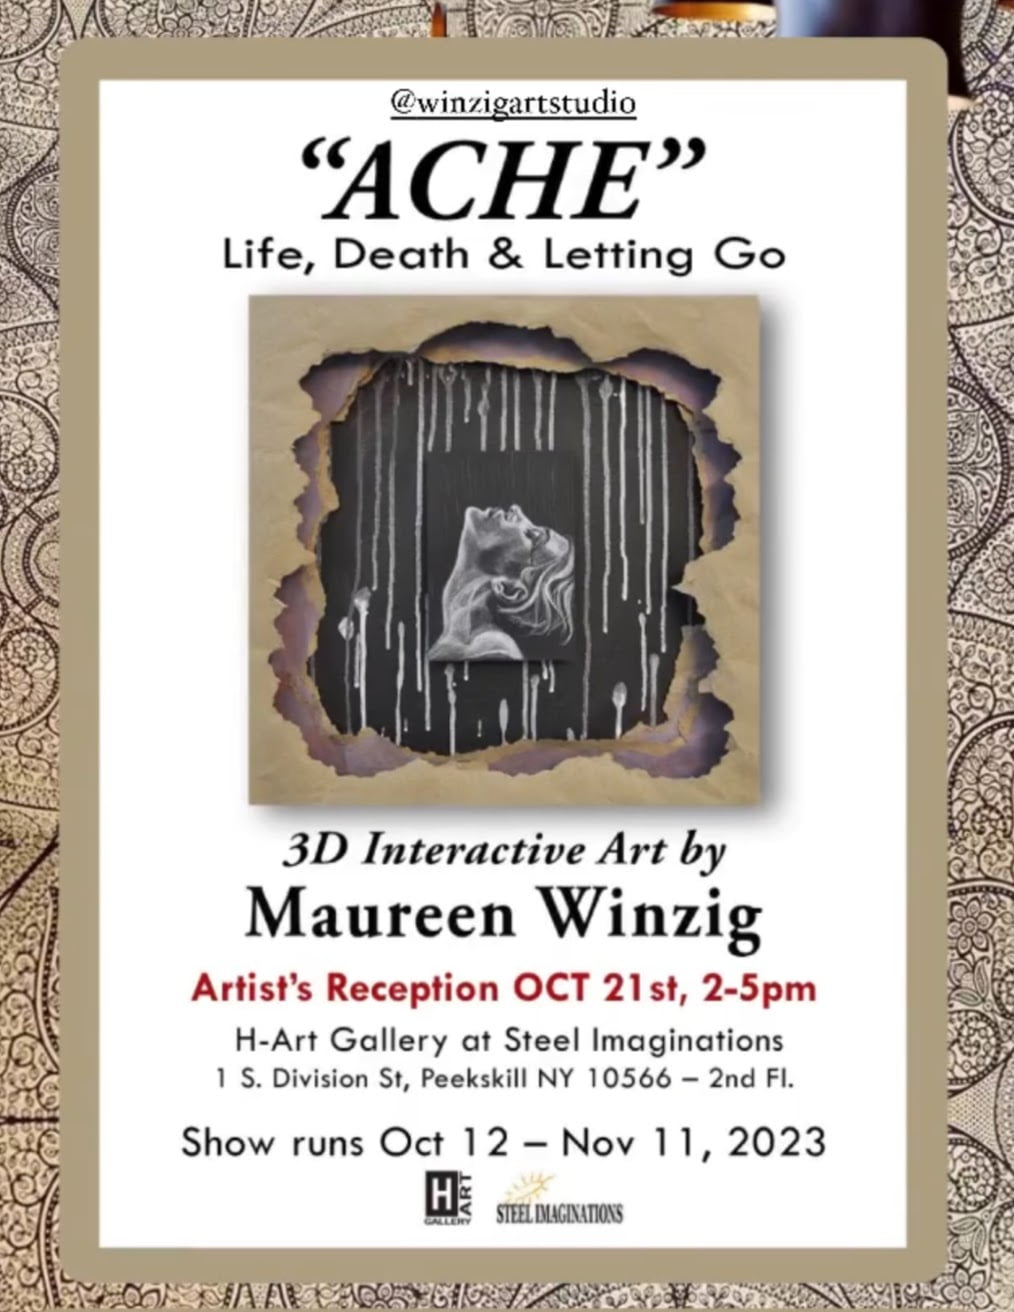 Flier for artist reception for "Ache" by Maureen Winzig